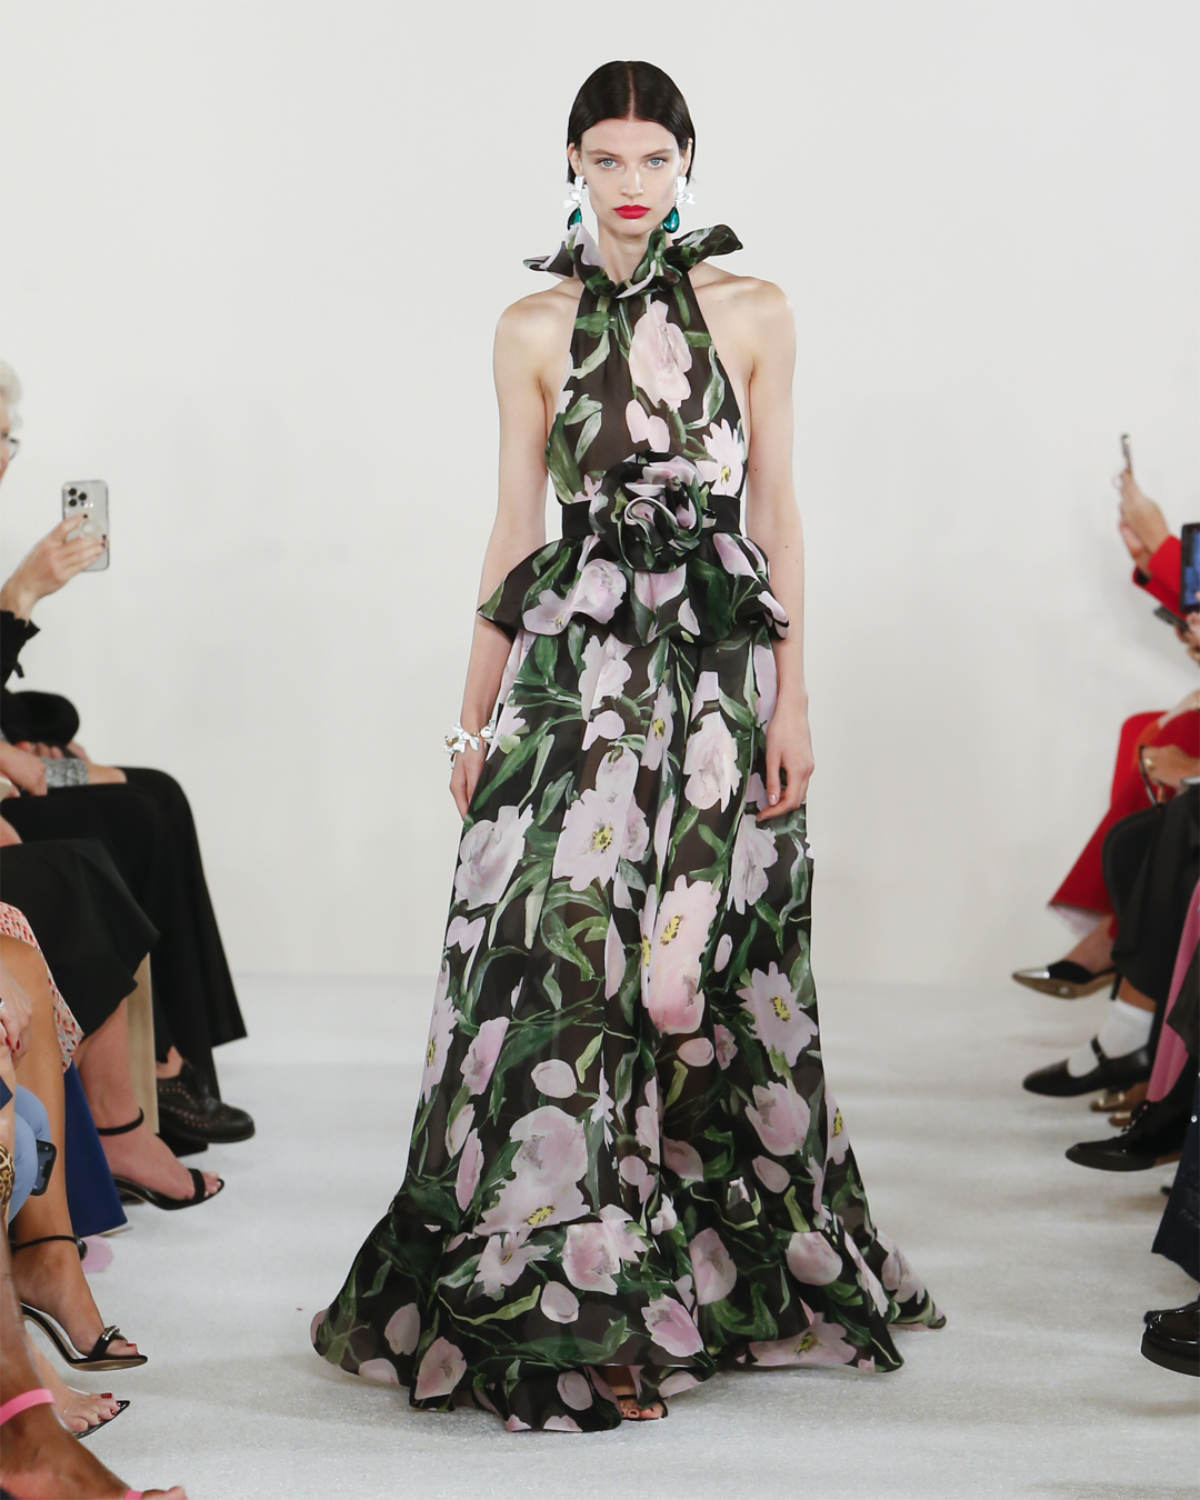 Carolina Herrera Presents Its New Spring 2023 Collection